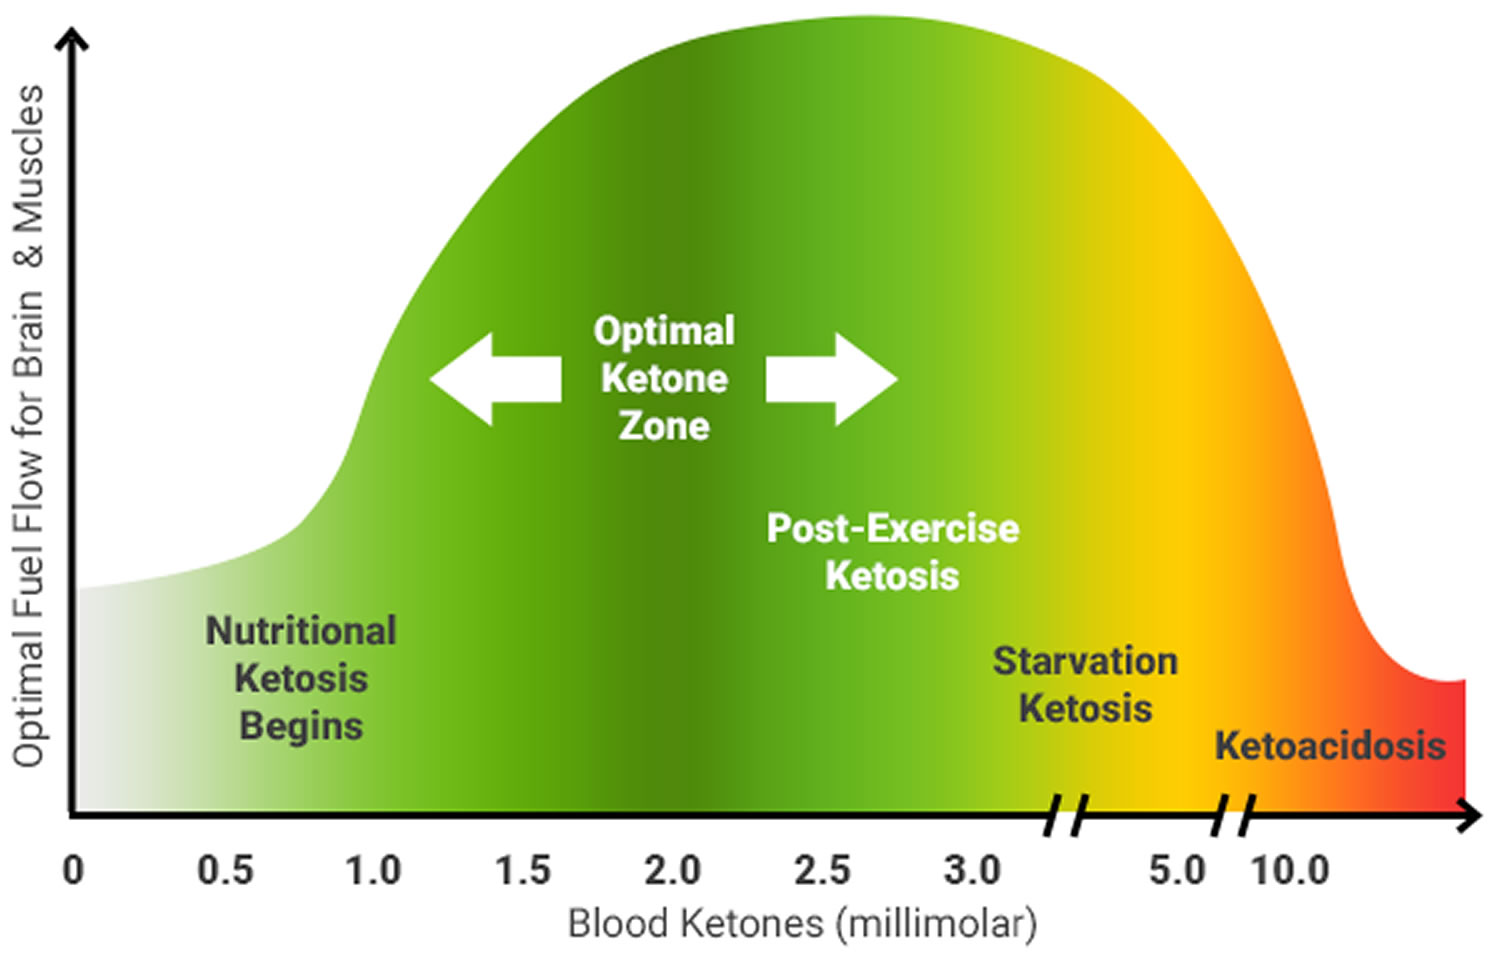 Blood ketone levels for ketosis and ketoacidosis